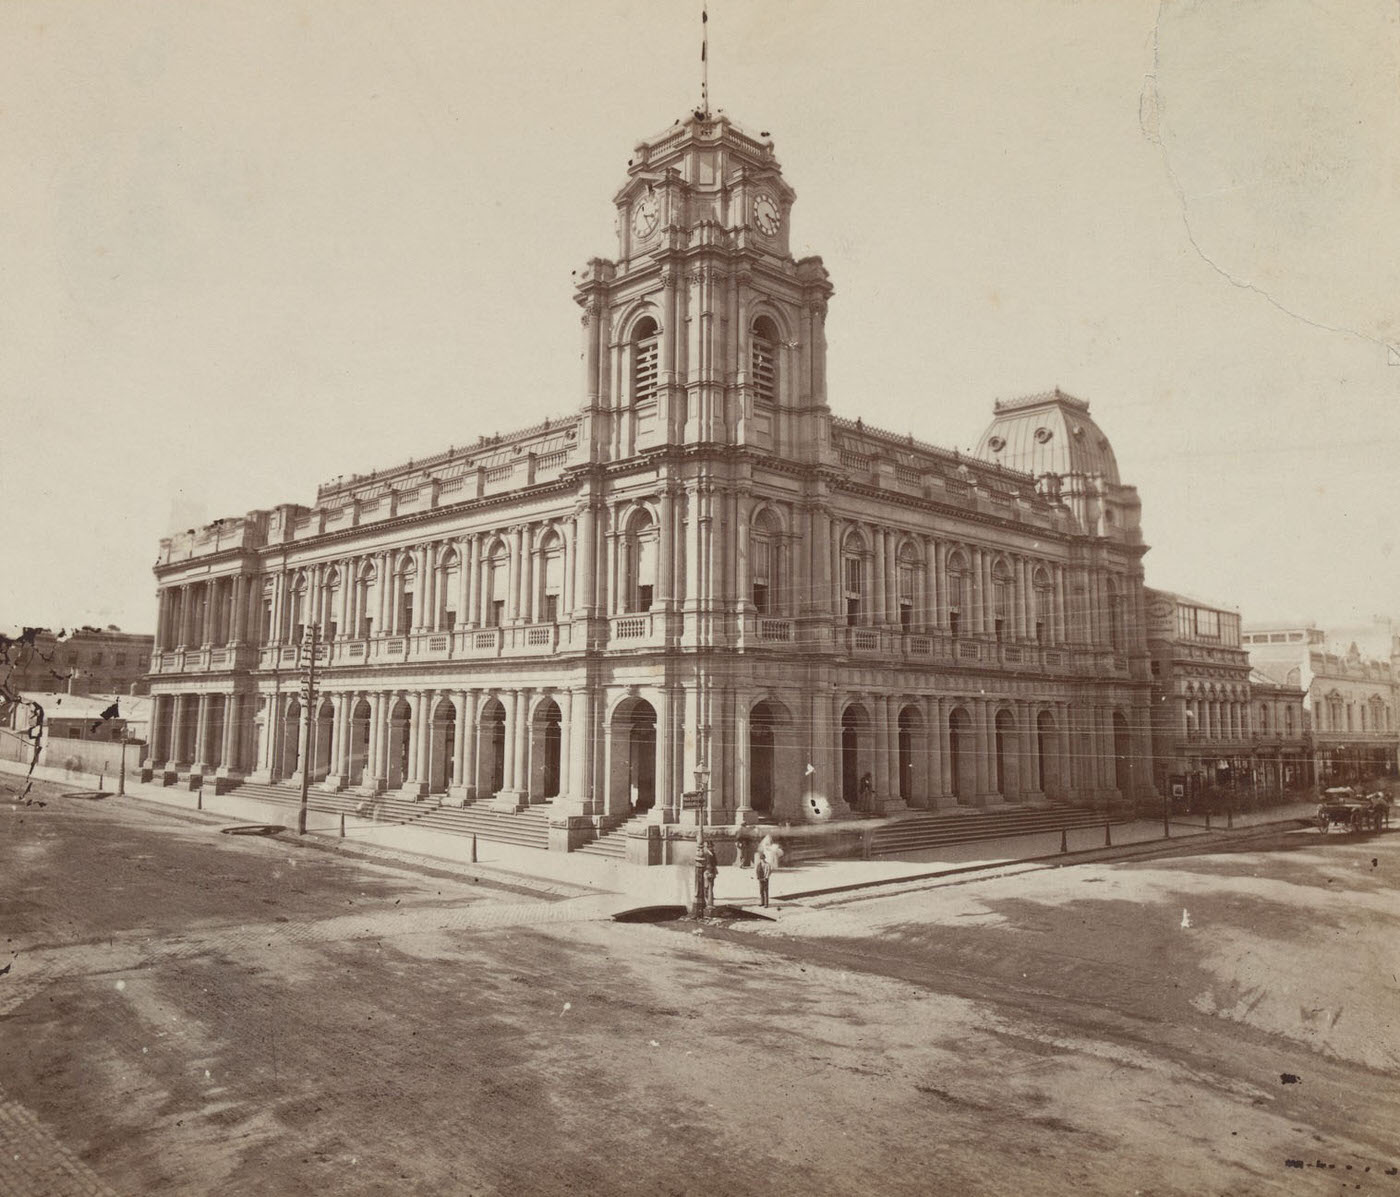 Melbourne General Post Office, 1887